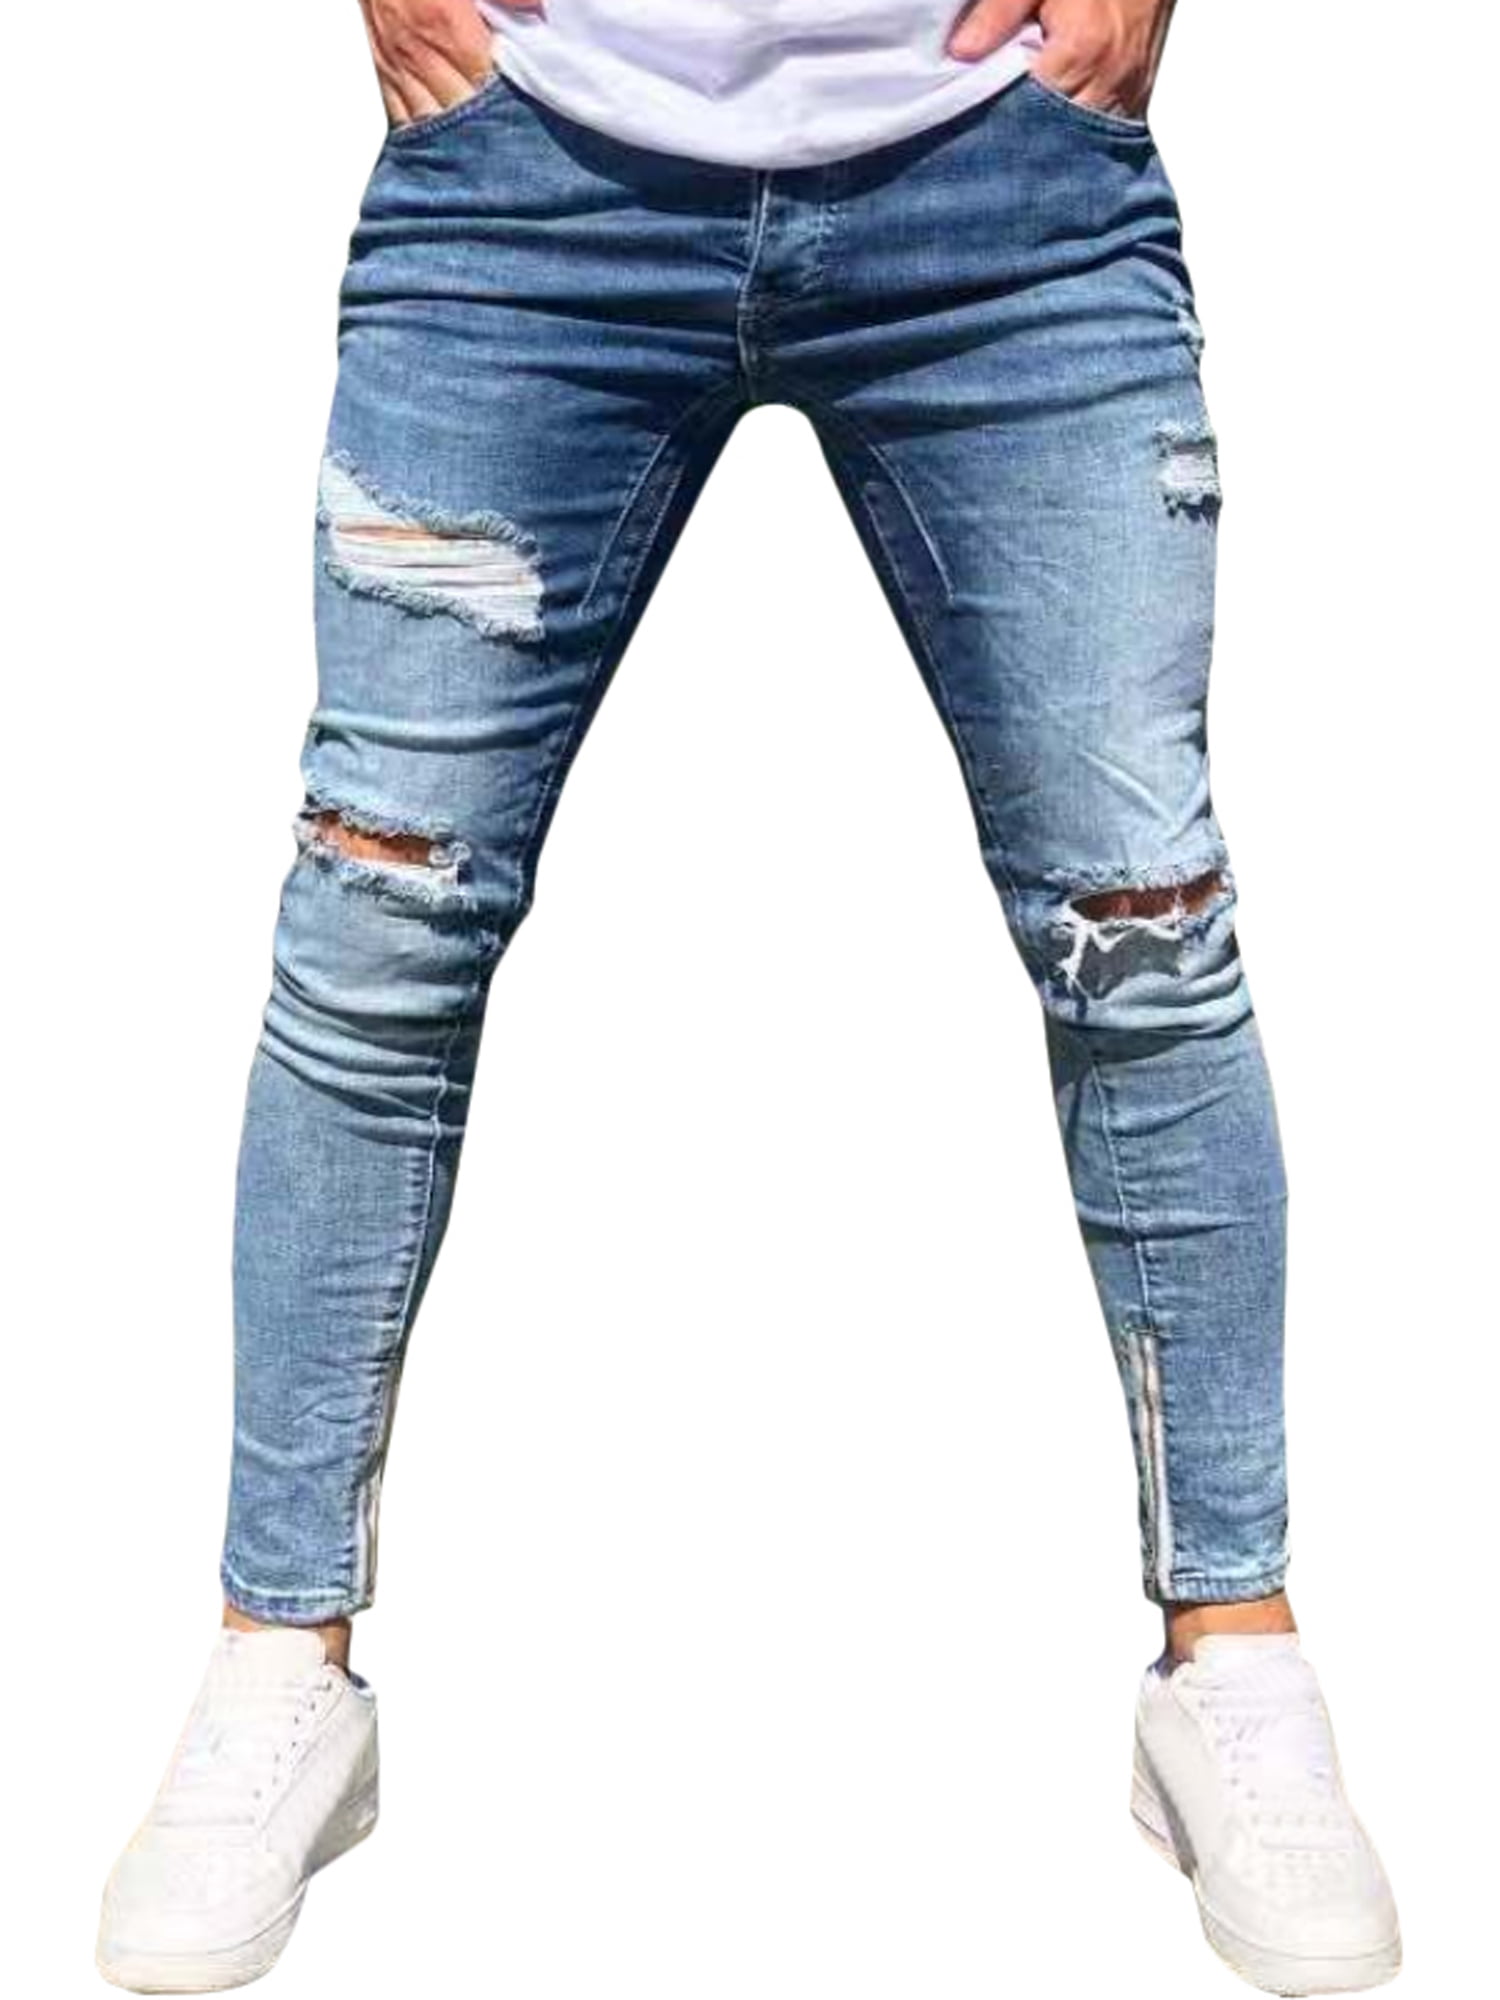 Wodstyle - Men's Skinny Ripped Jeggings Destroyed Jeans Denim Zipper ...